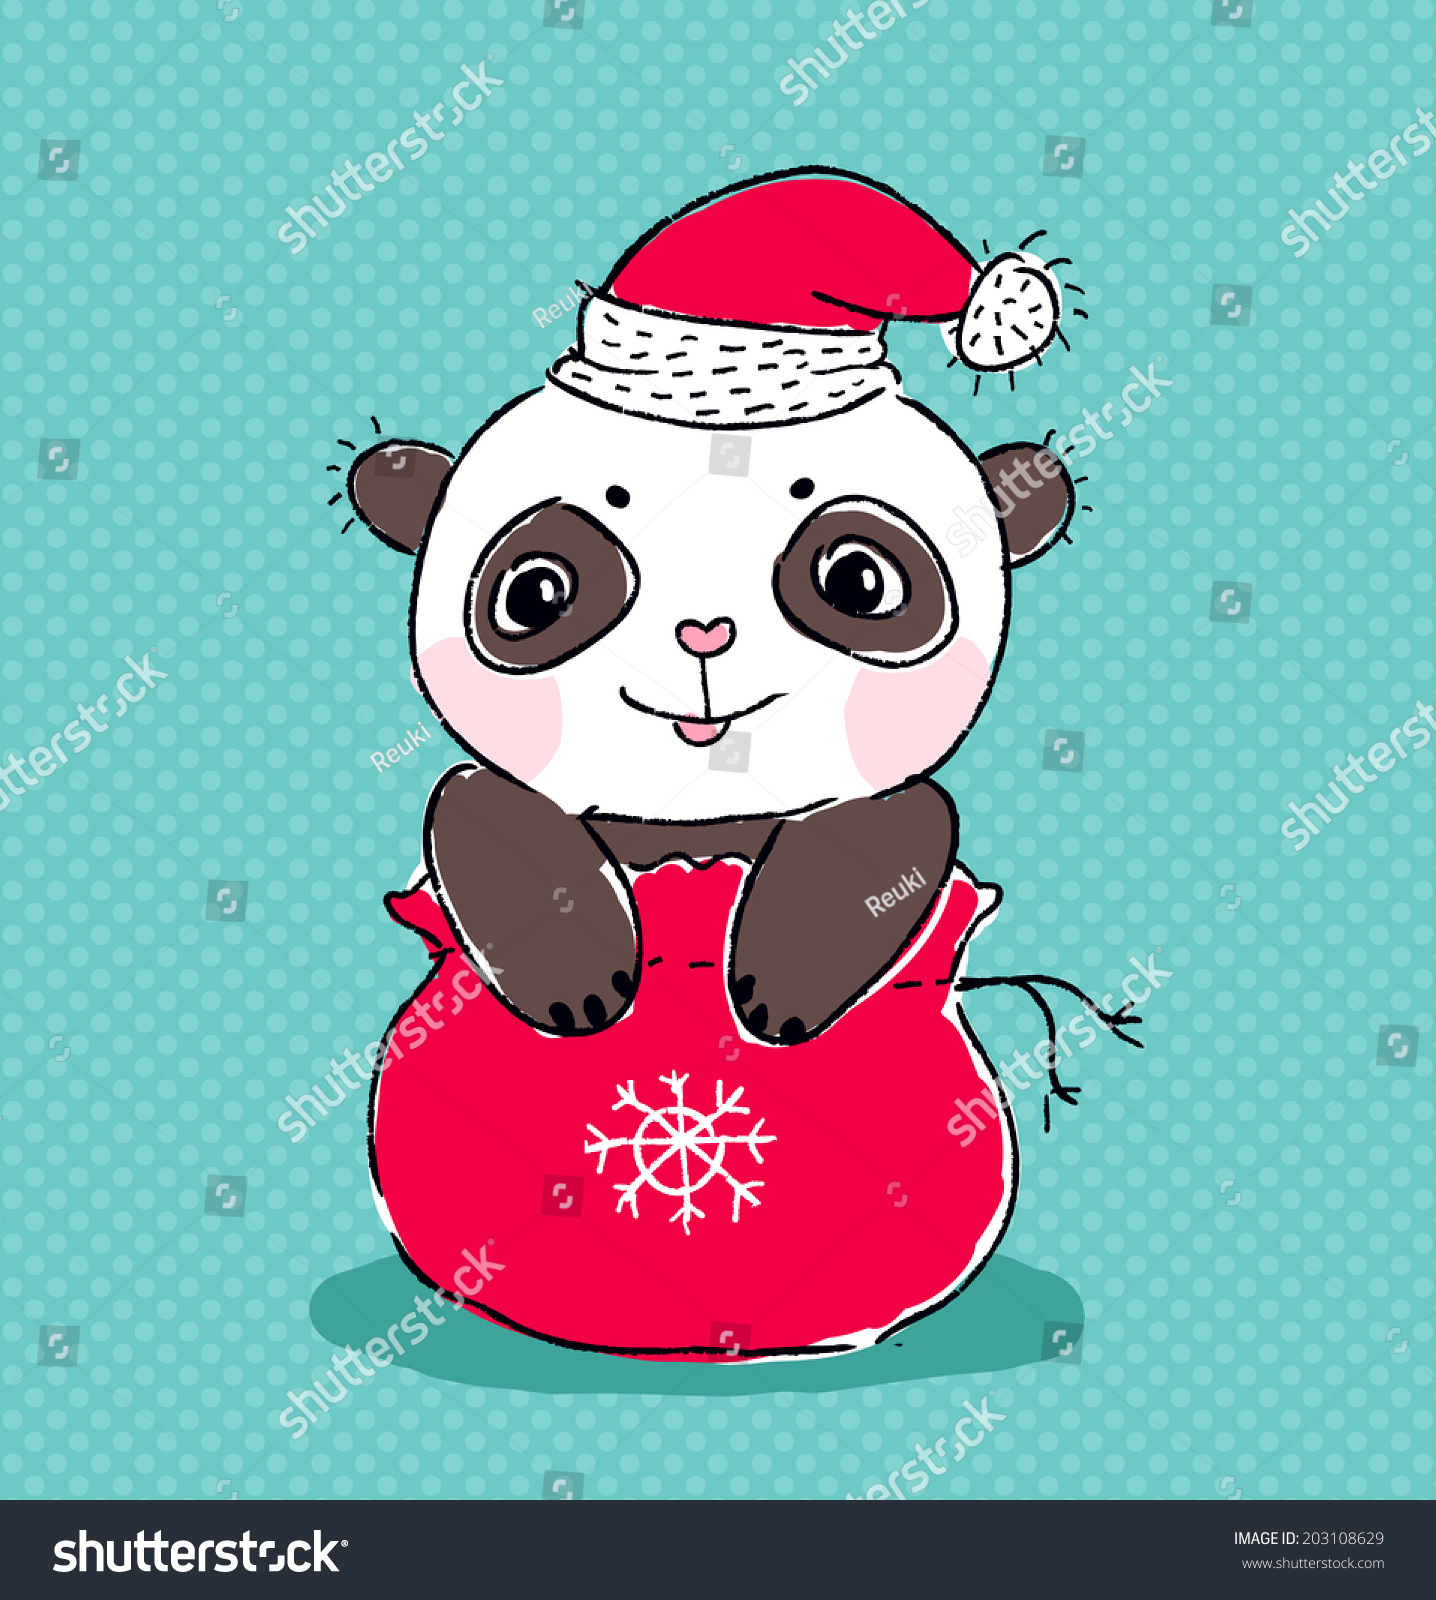 Download Christmas Panda Stock Vector Illustration 203108629 ...